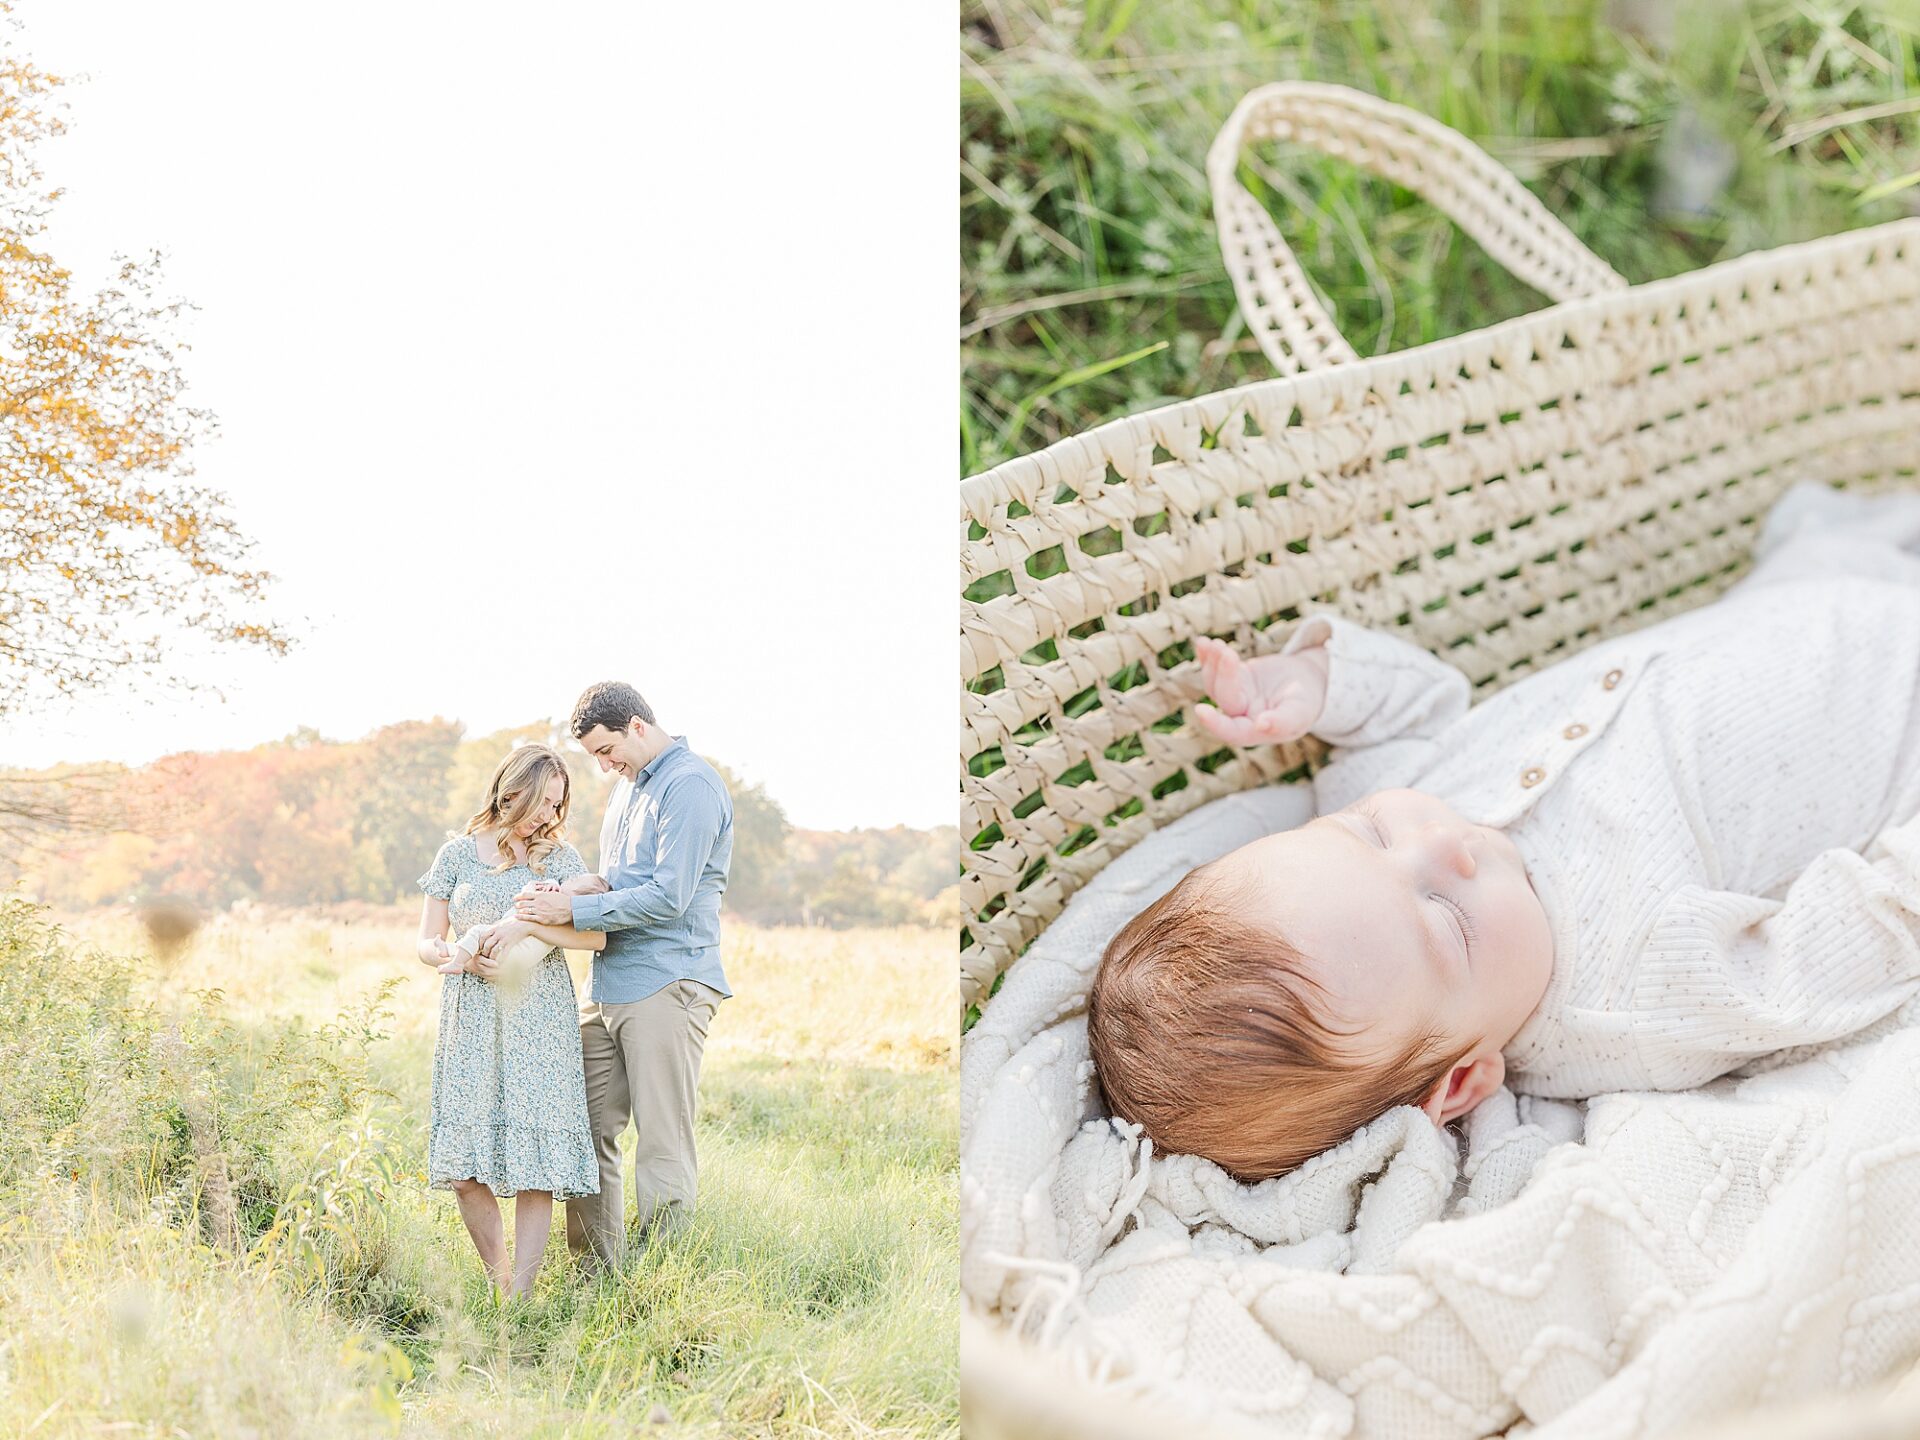 Fall outdoor newborn photo session in Wayland Massachusetts with Sara Sniderman Photography